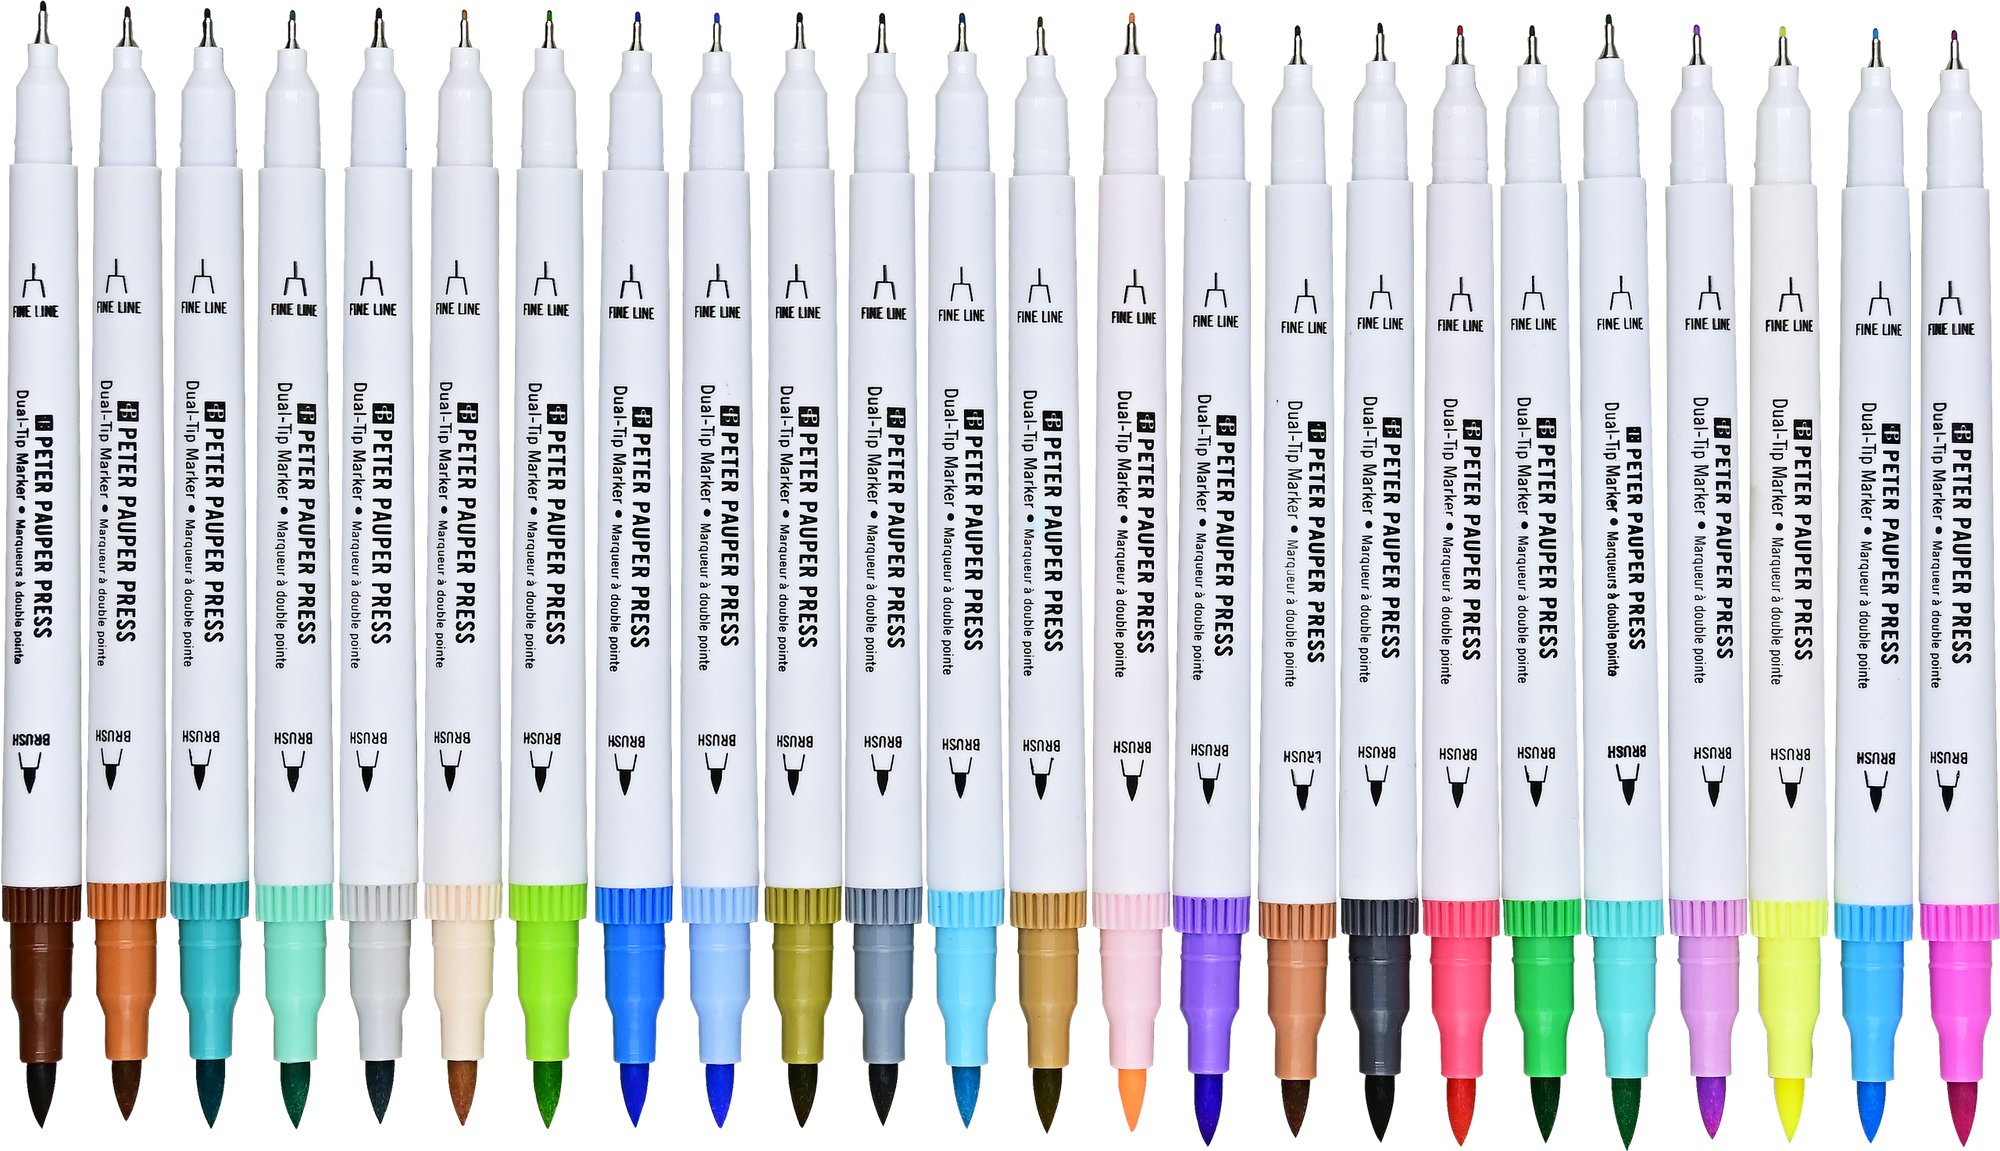 Studio Series Dual-Tip Pastel Markers (Set of 24)